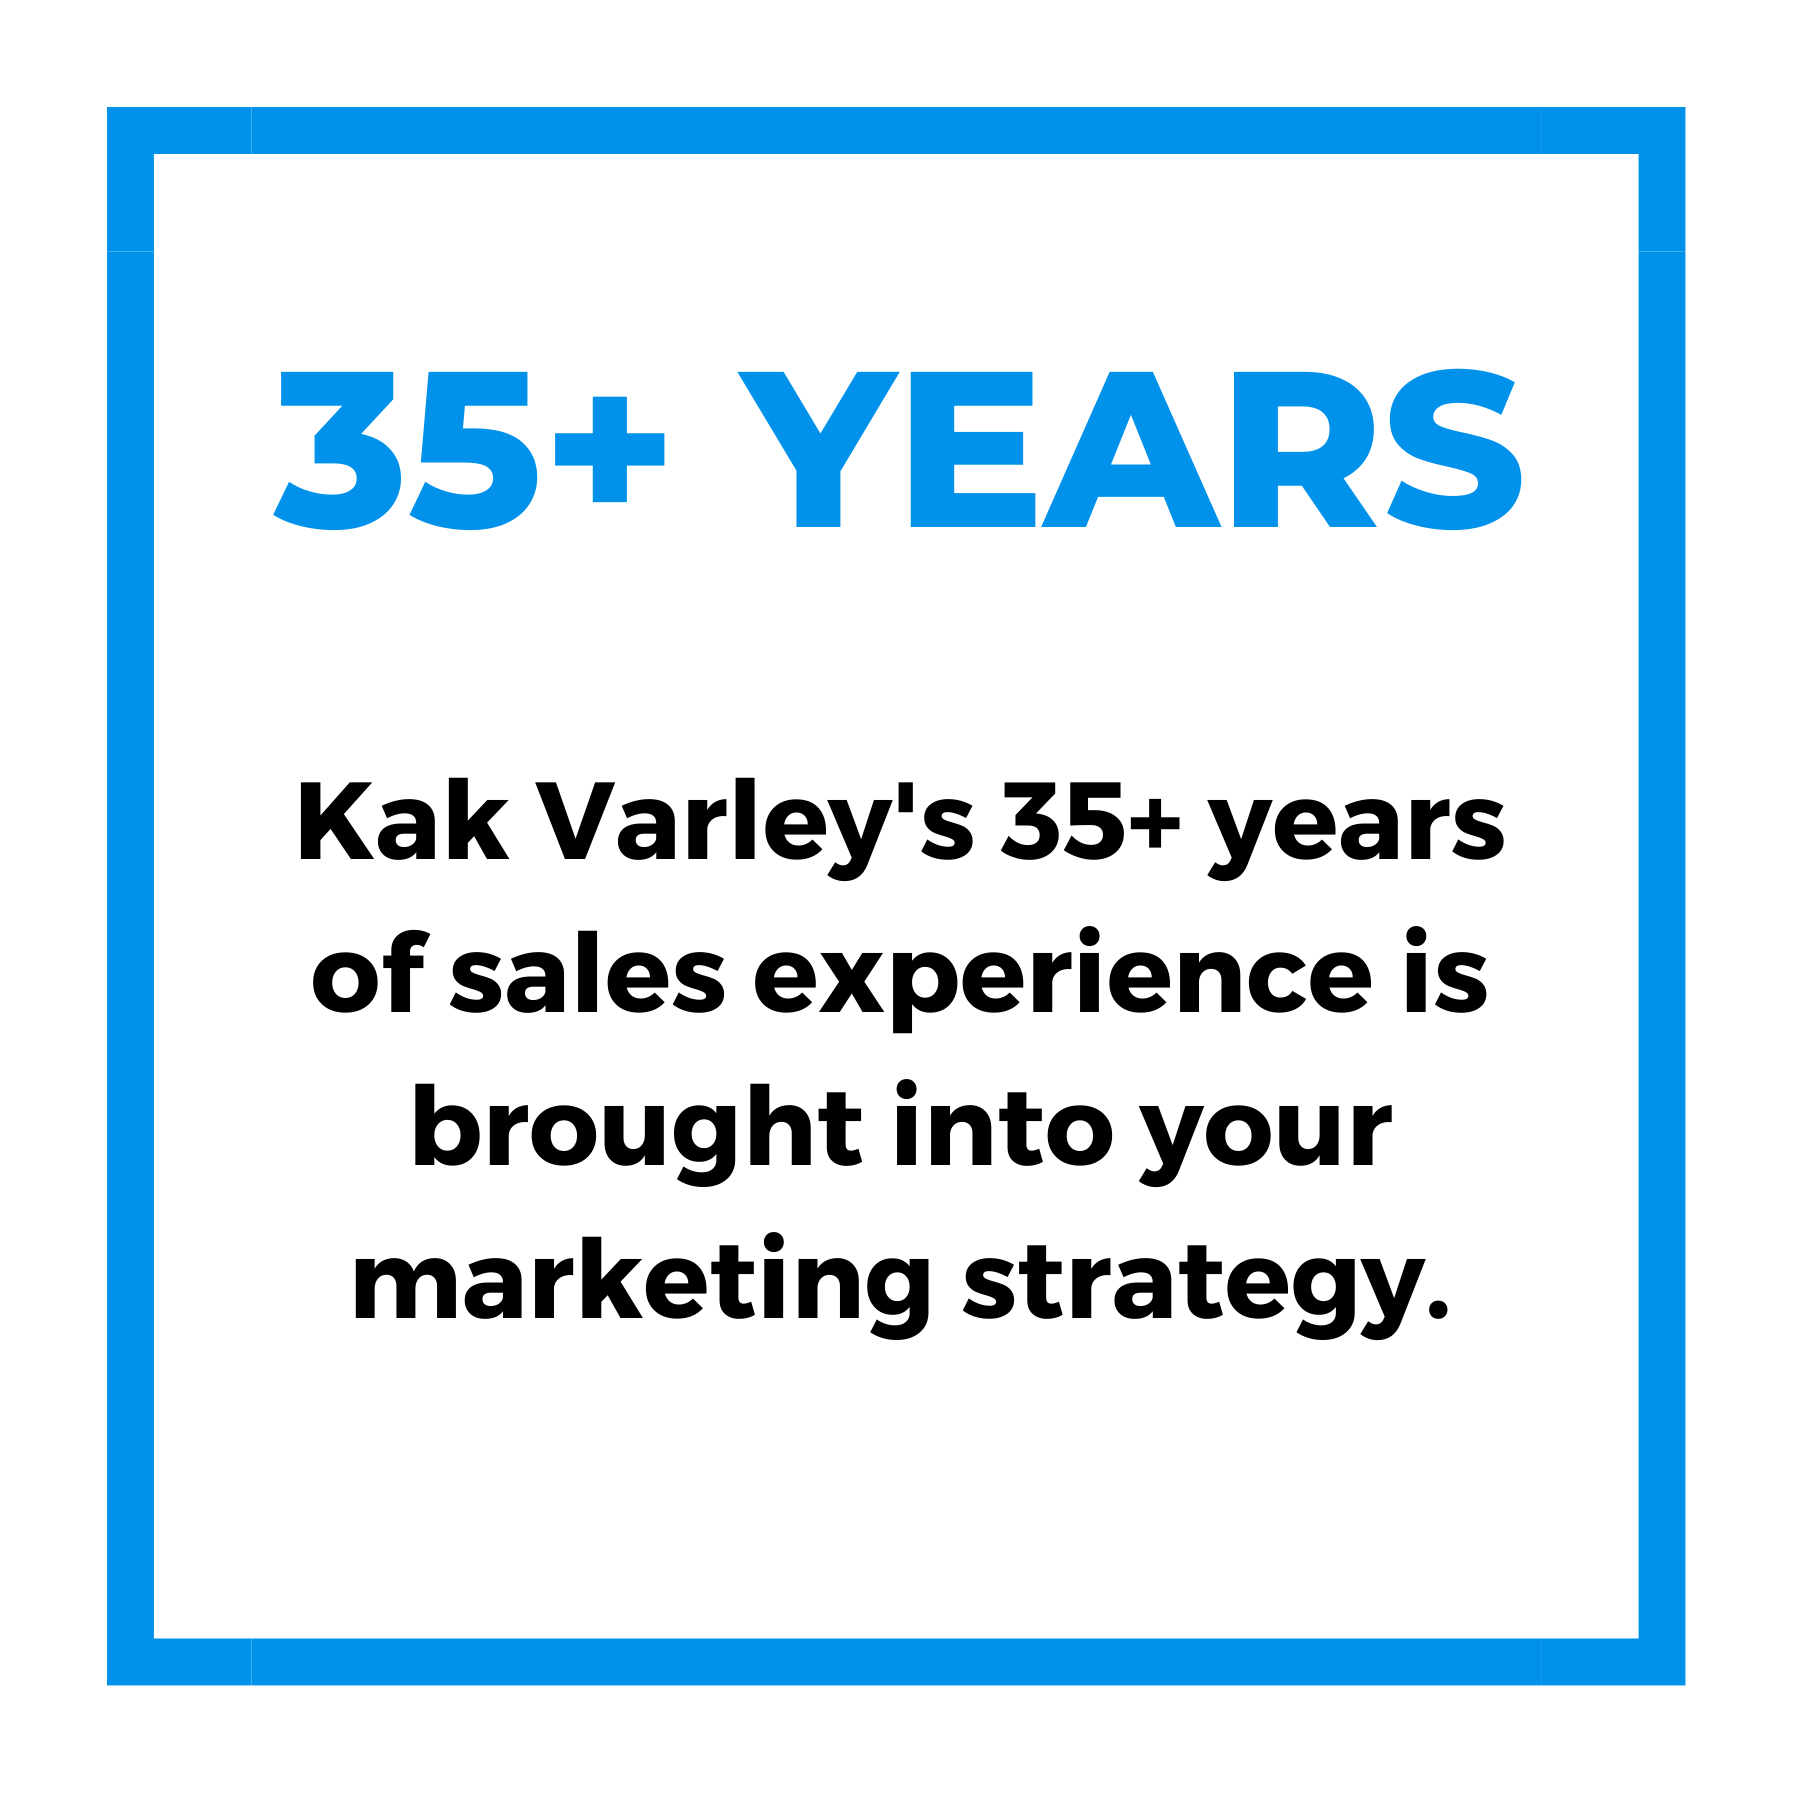 About Kak Varley- Sales Experience